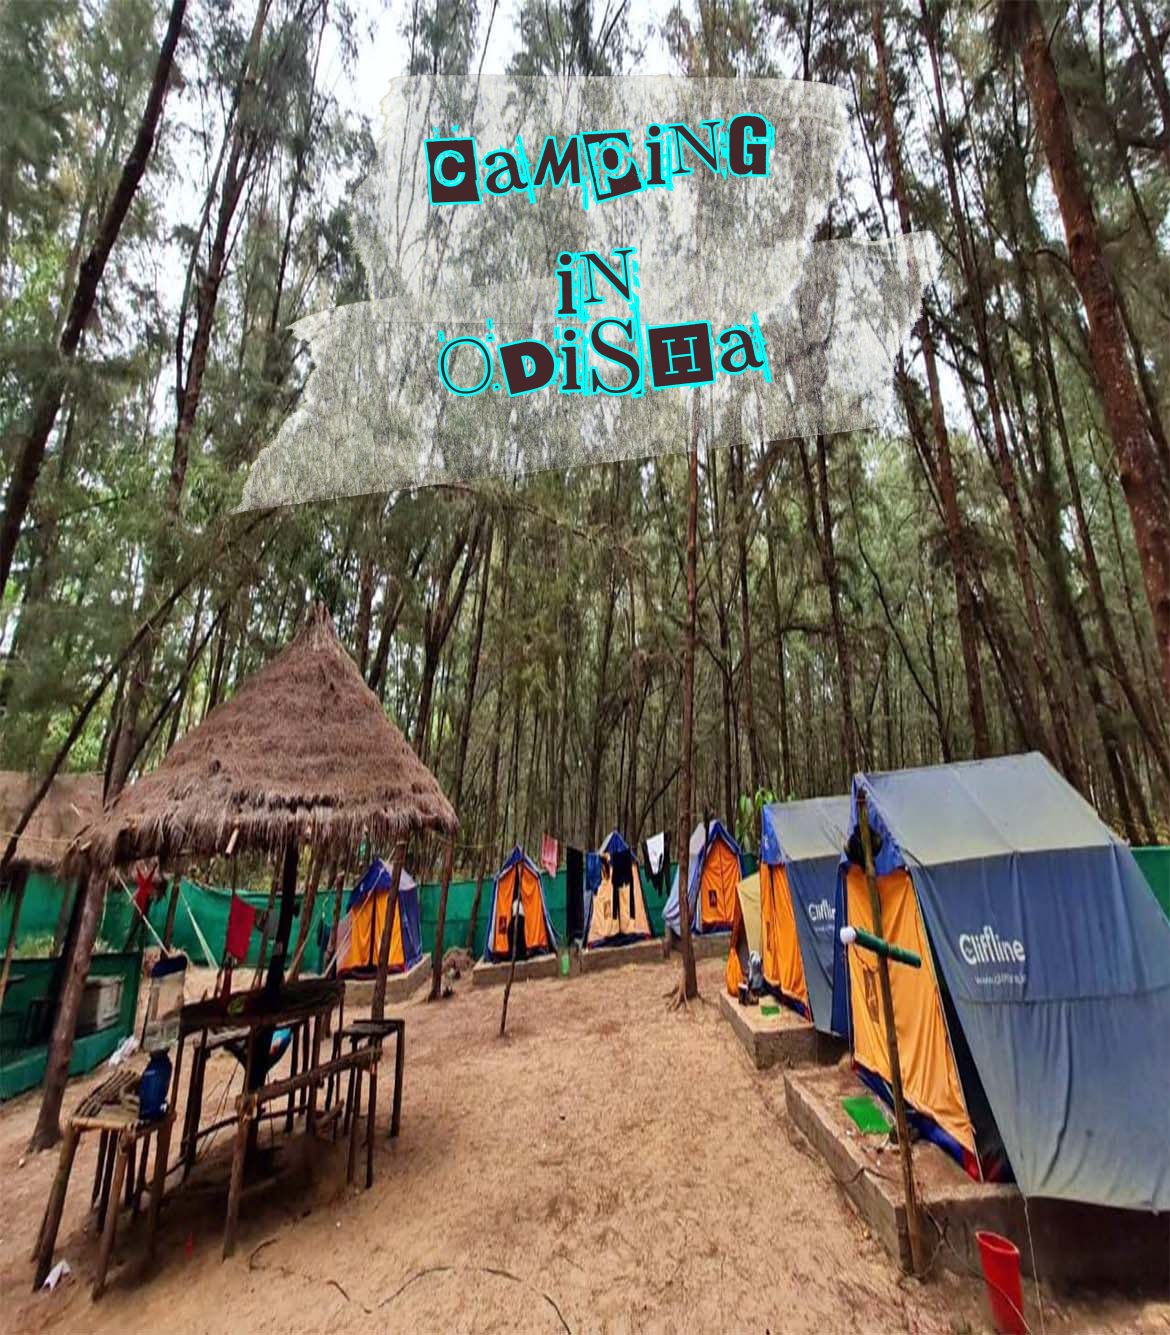 Camping in Odisha